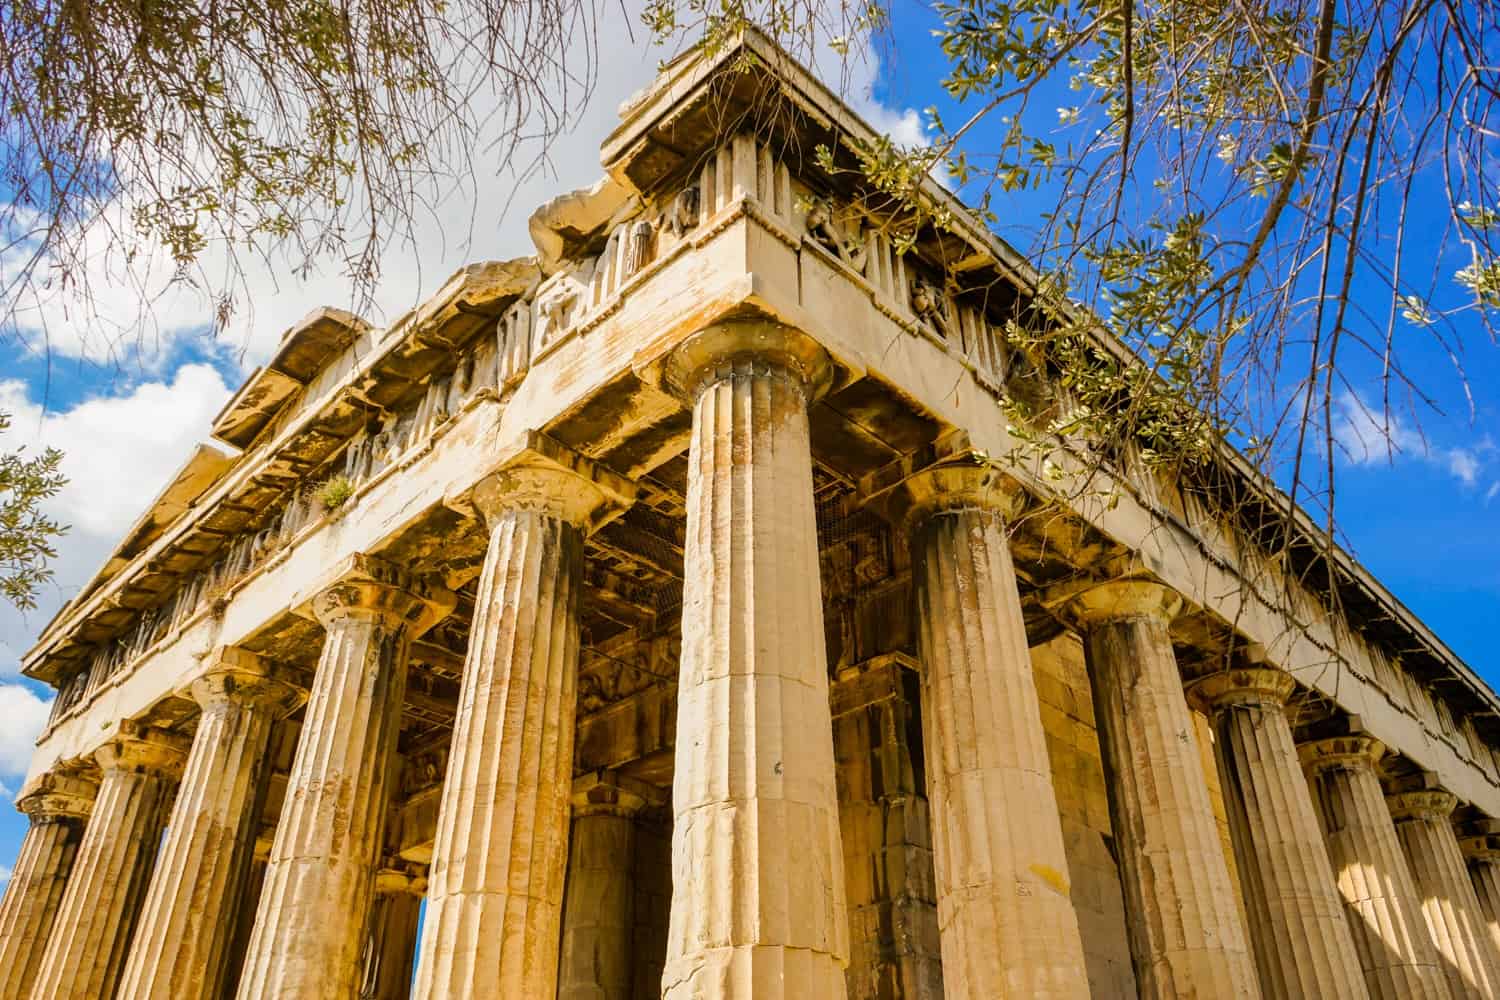 Temple of Hephaestus from below